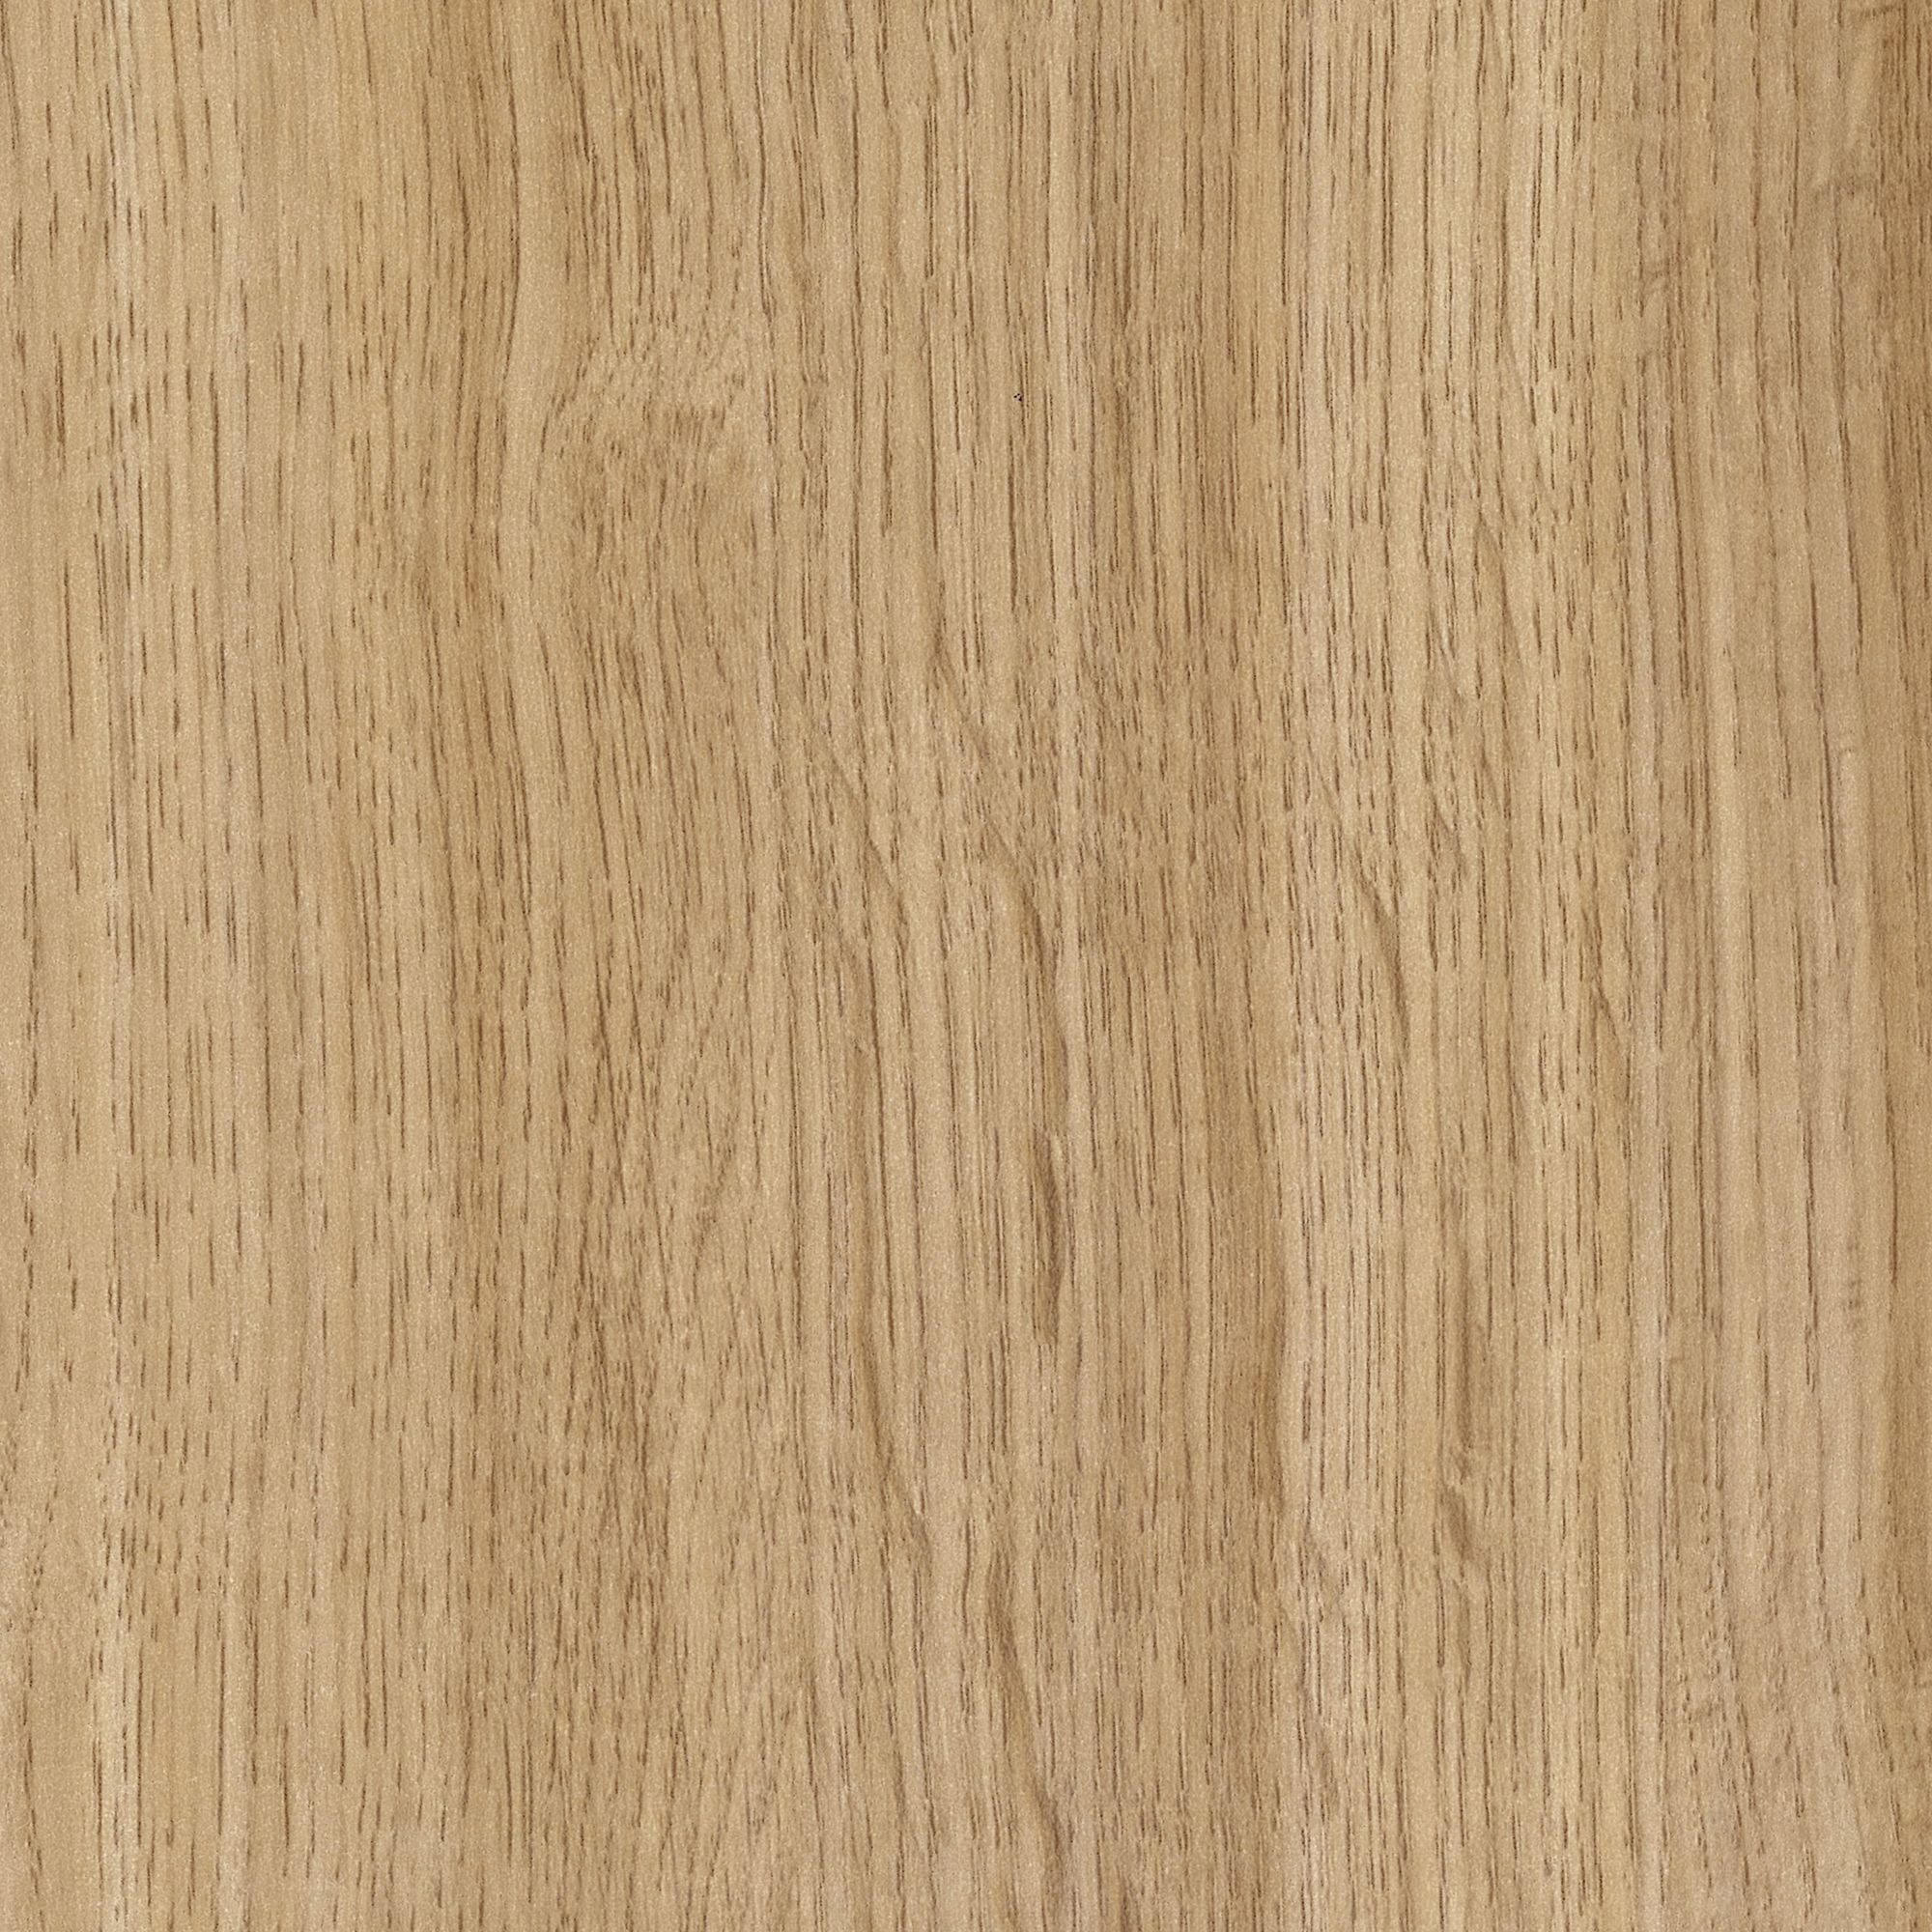 GoodHome FU026 Natural Wood effect Scotia trim, 220cm